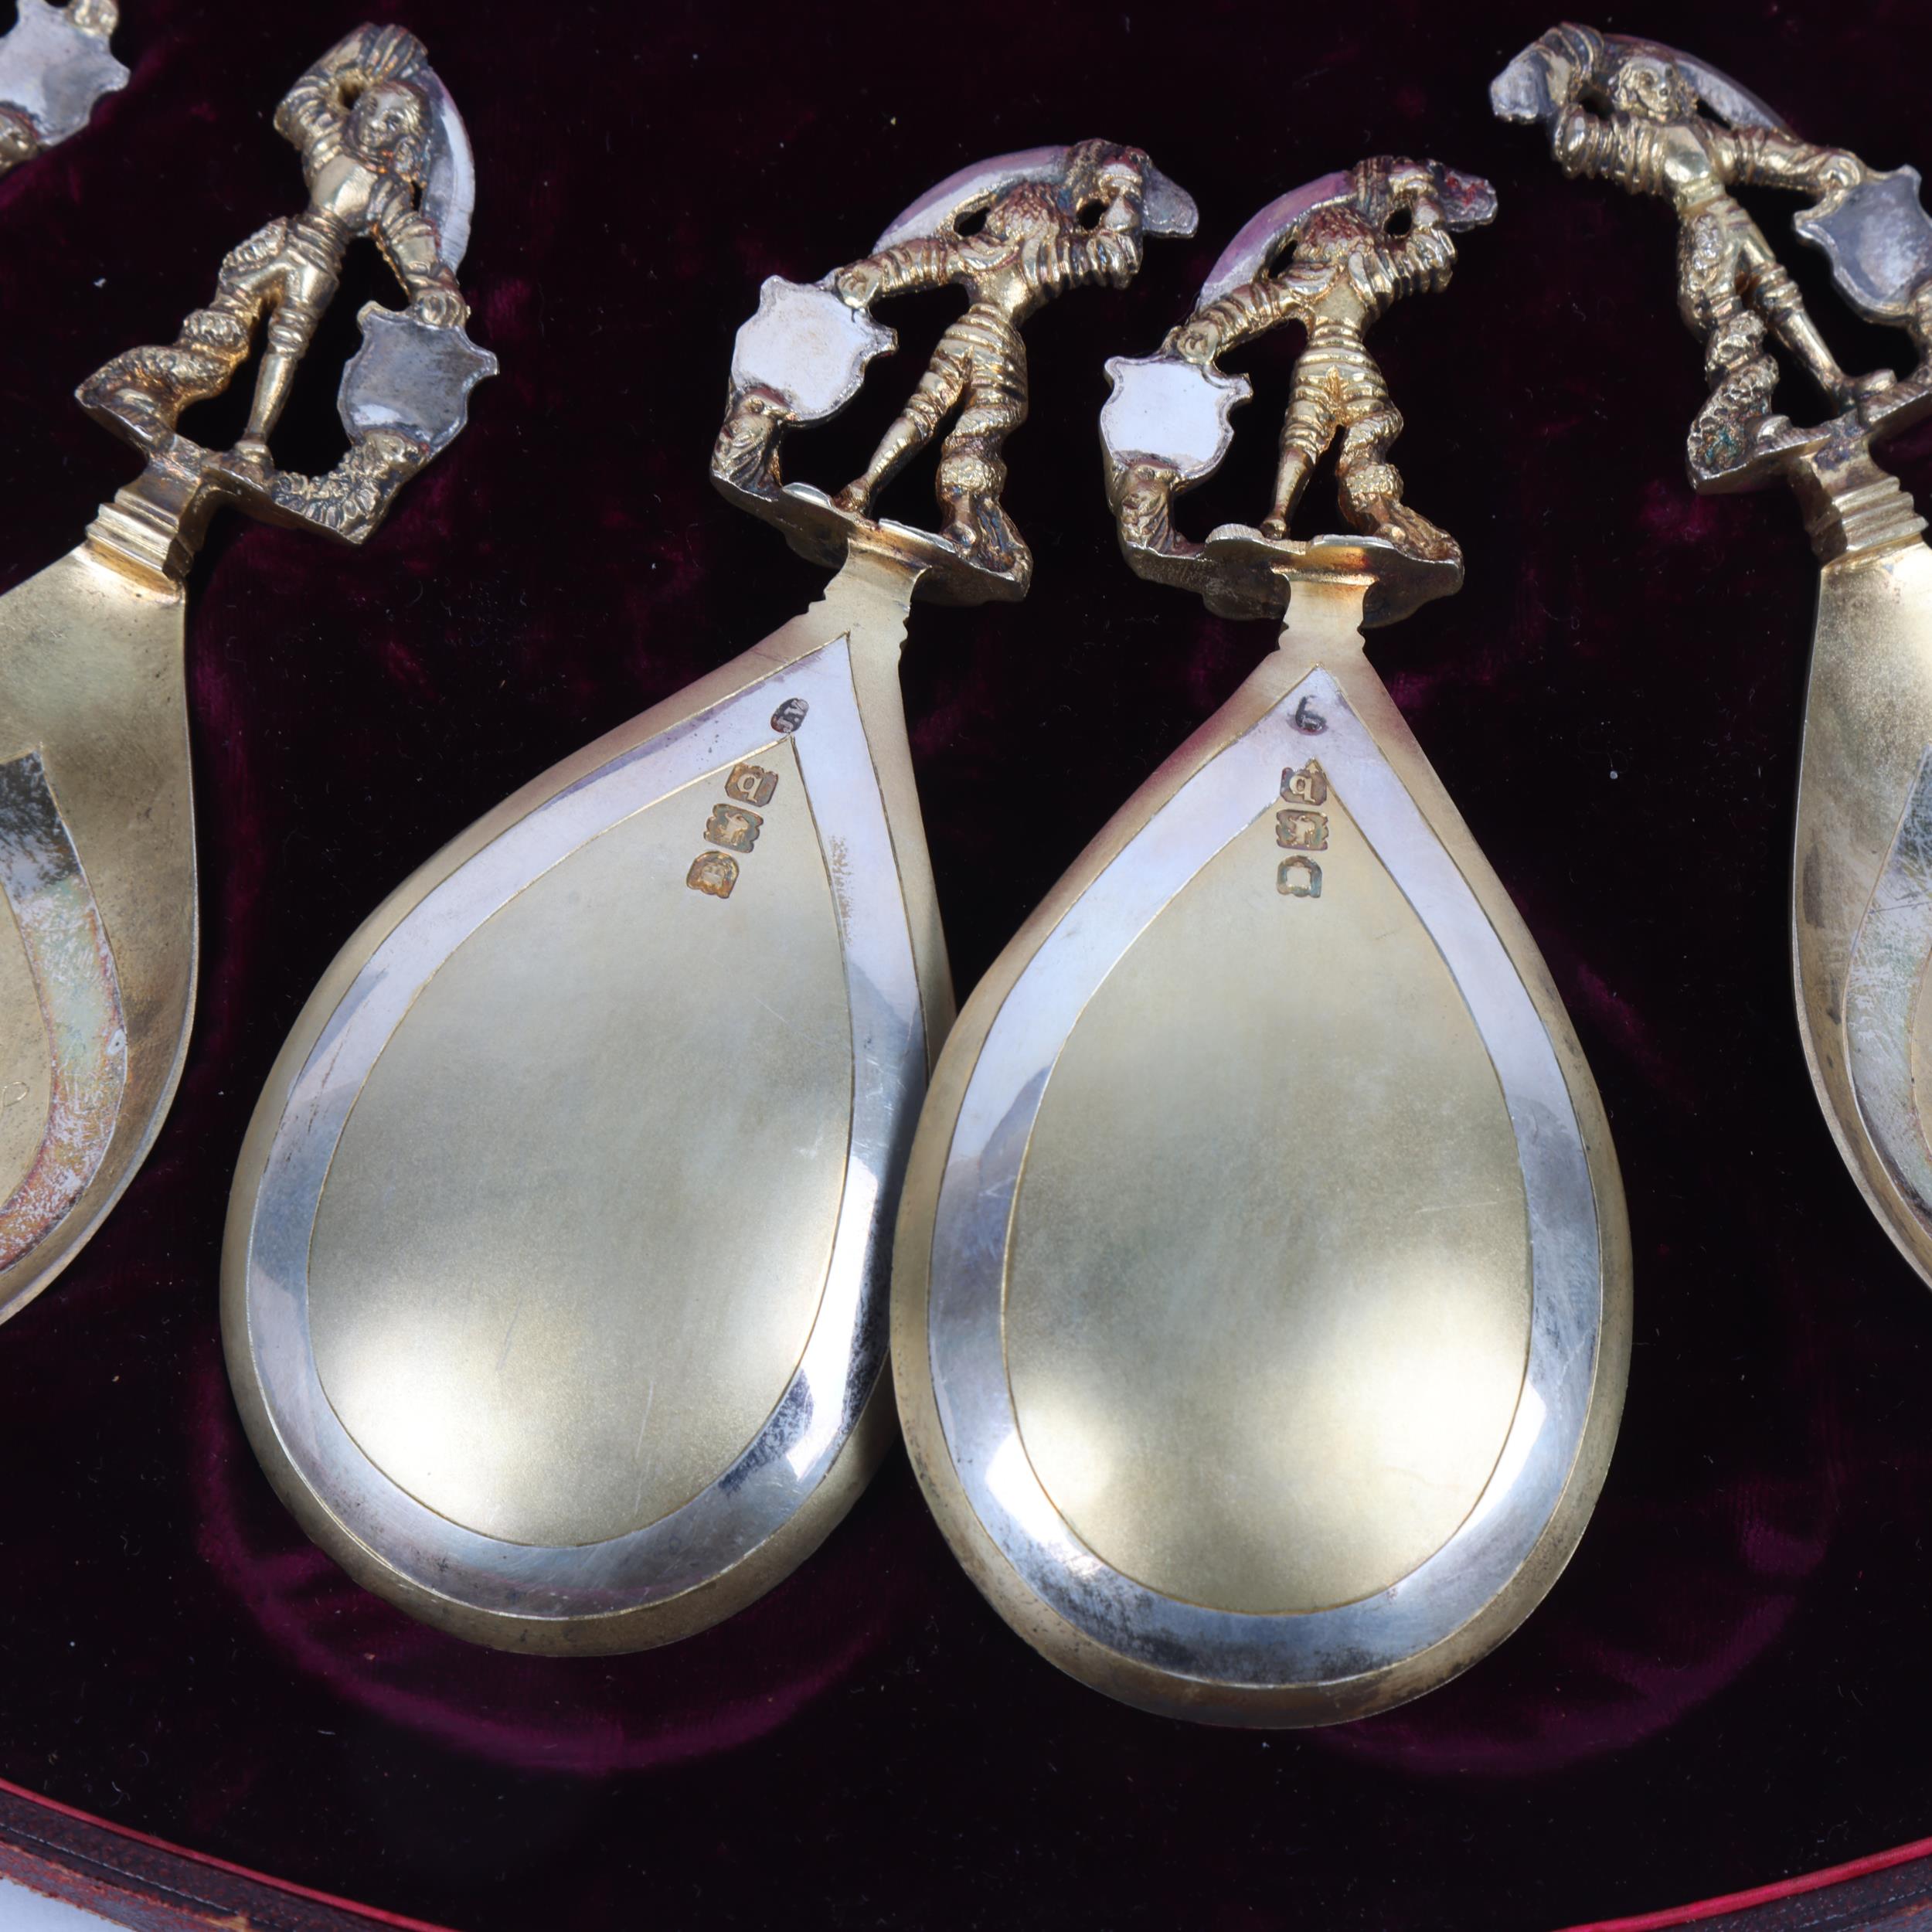 A cased set of 6 parcel-gilt silver 16th century style Scandinavian spoons, CJ Vander, London - Image 3 of 3